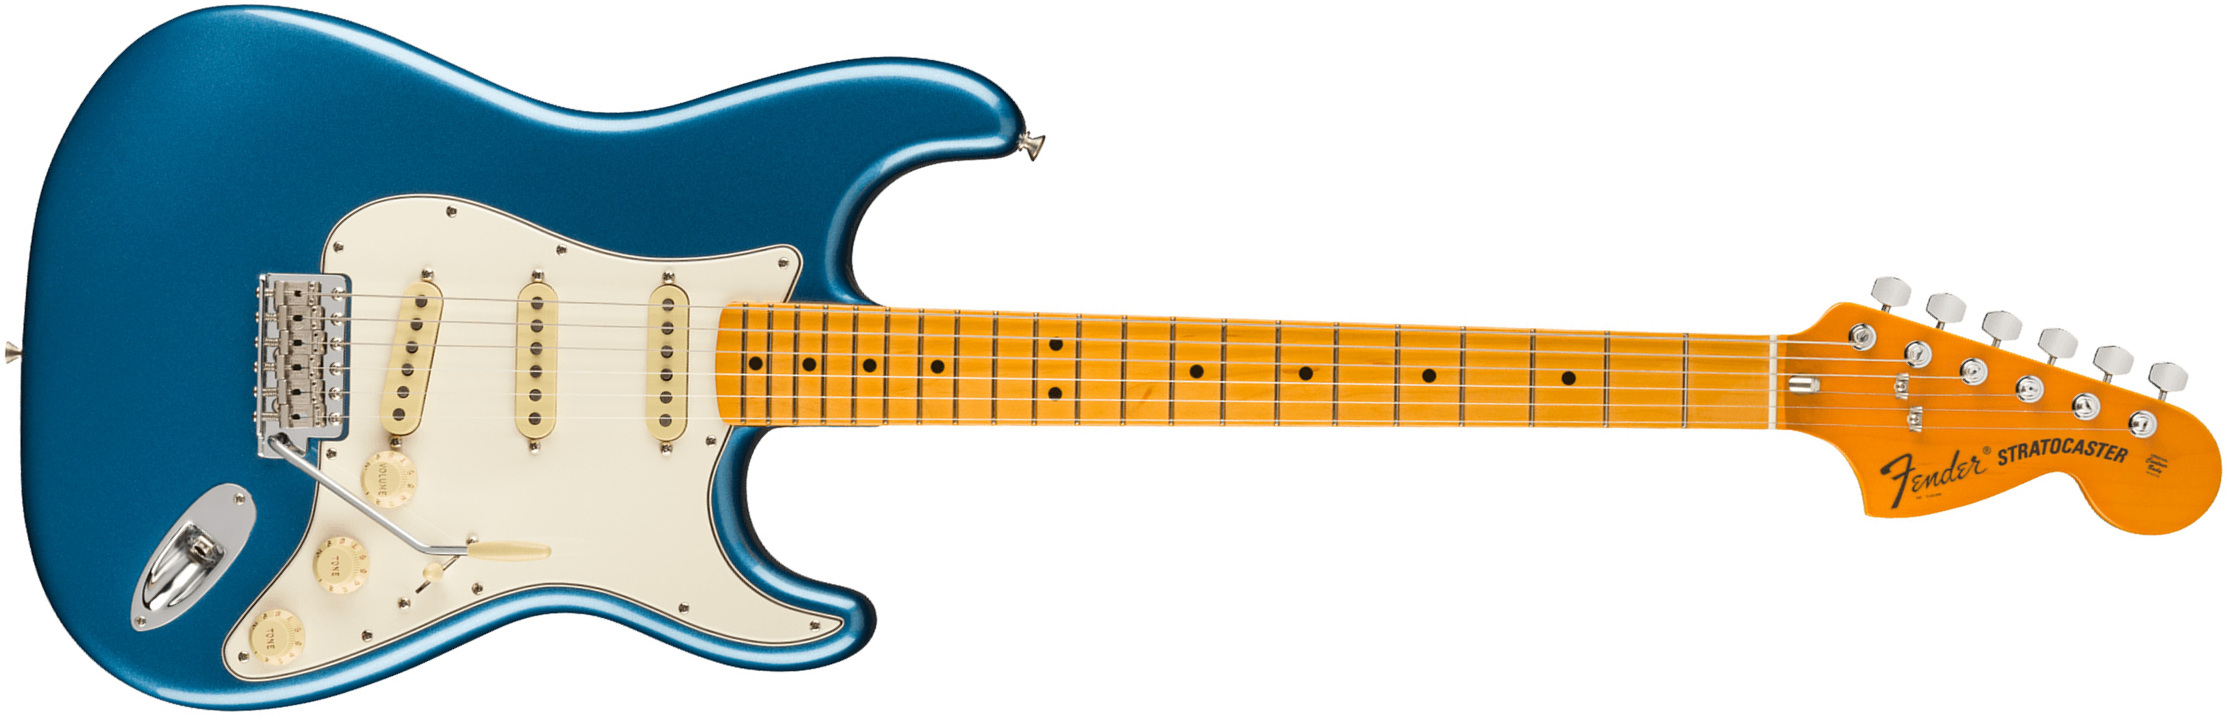 Fender Strat 1973 American Vintage Ii Usa 3s Trem Mn - Lake Placid Blue - Str shape electric guitar - Main picture